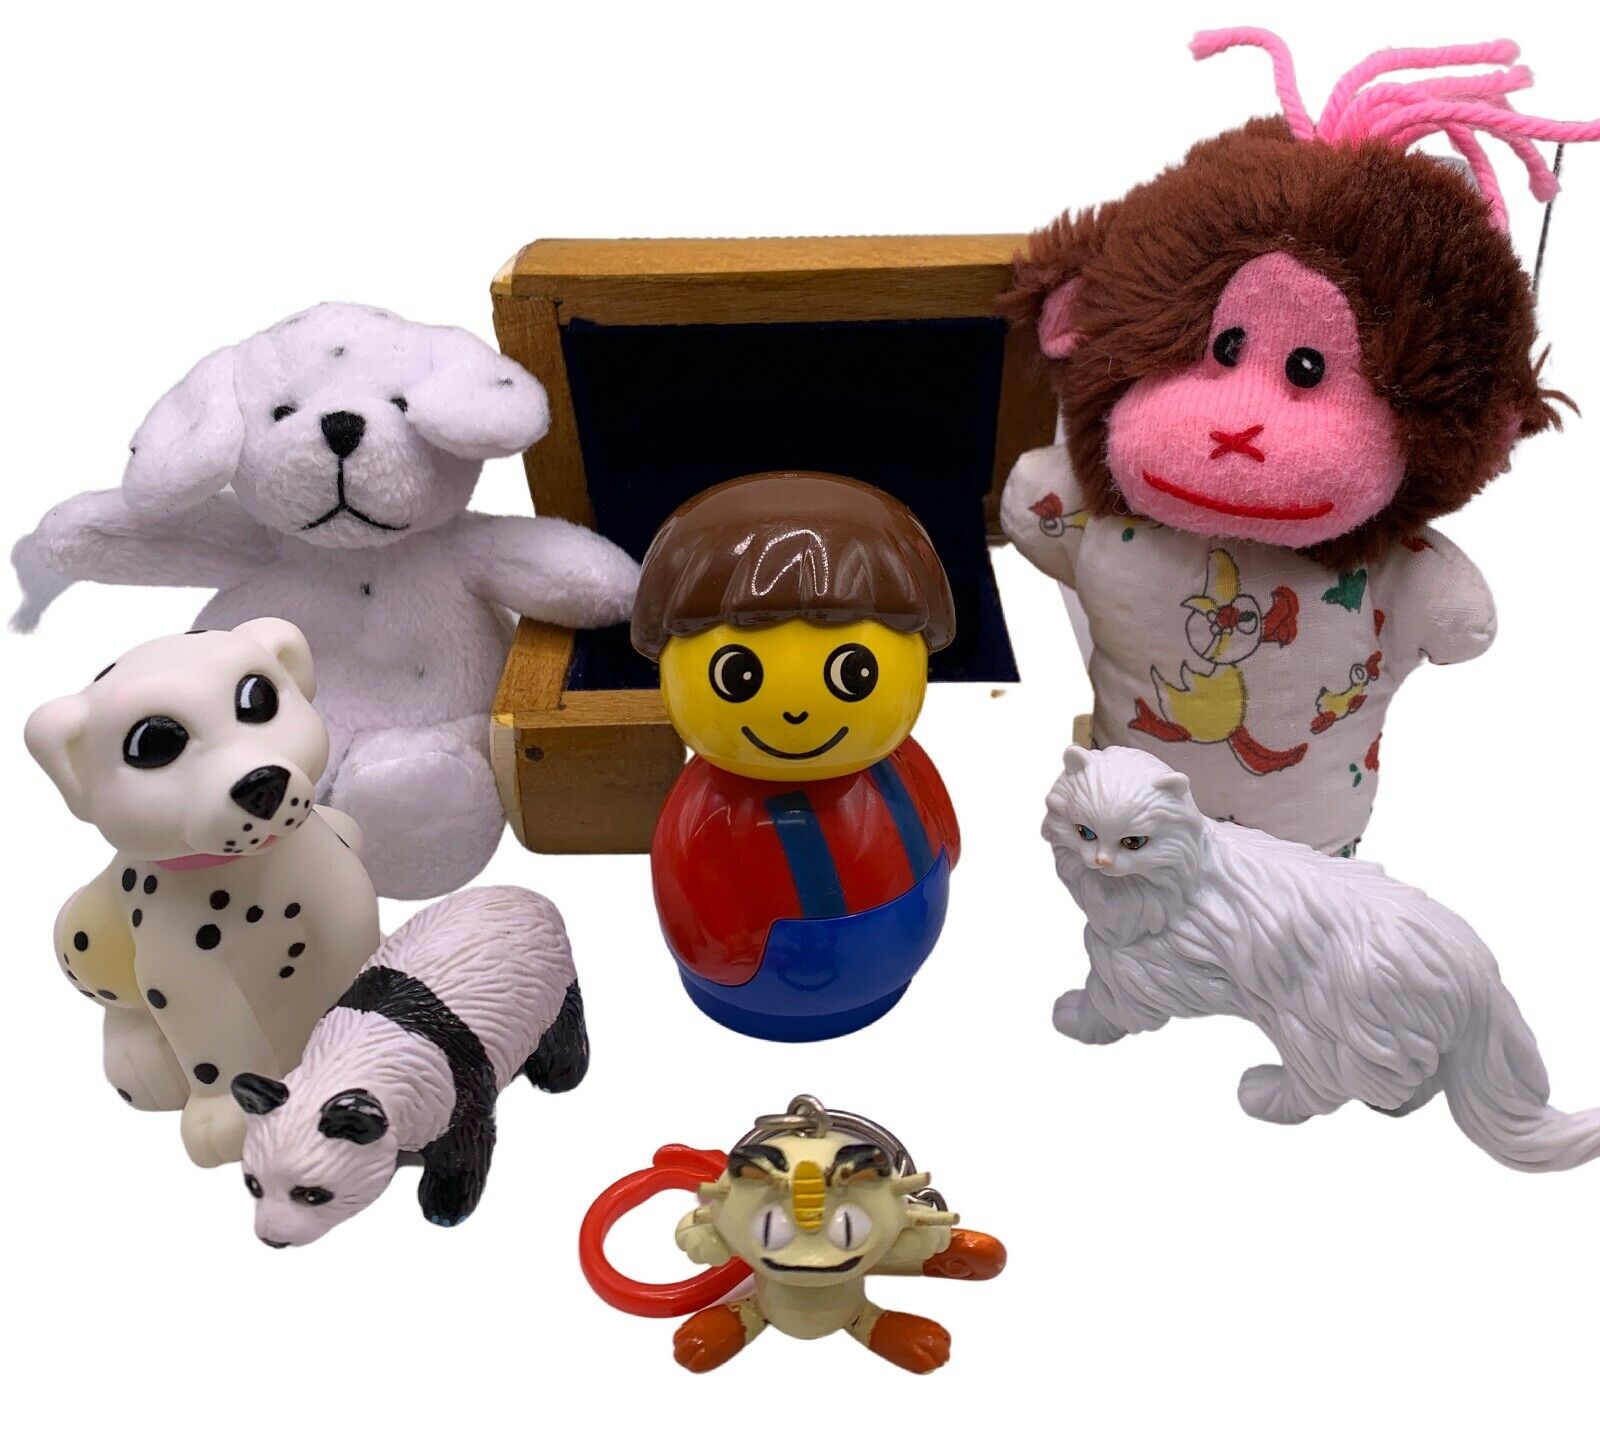 Lot of 8 Small Vintage Toys - Plush Lego Pokemon Meowth Dalmatian Monkey Panda